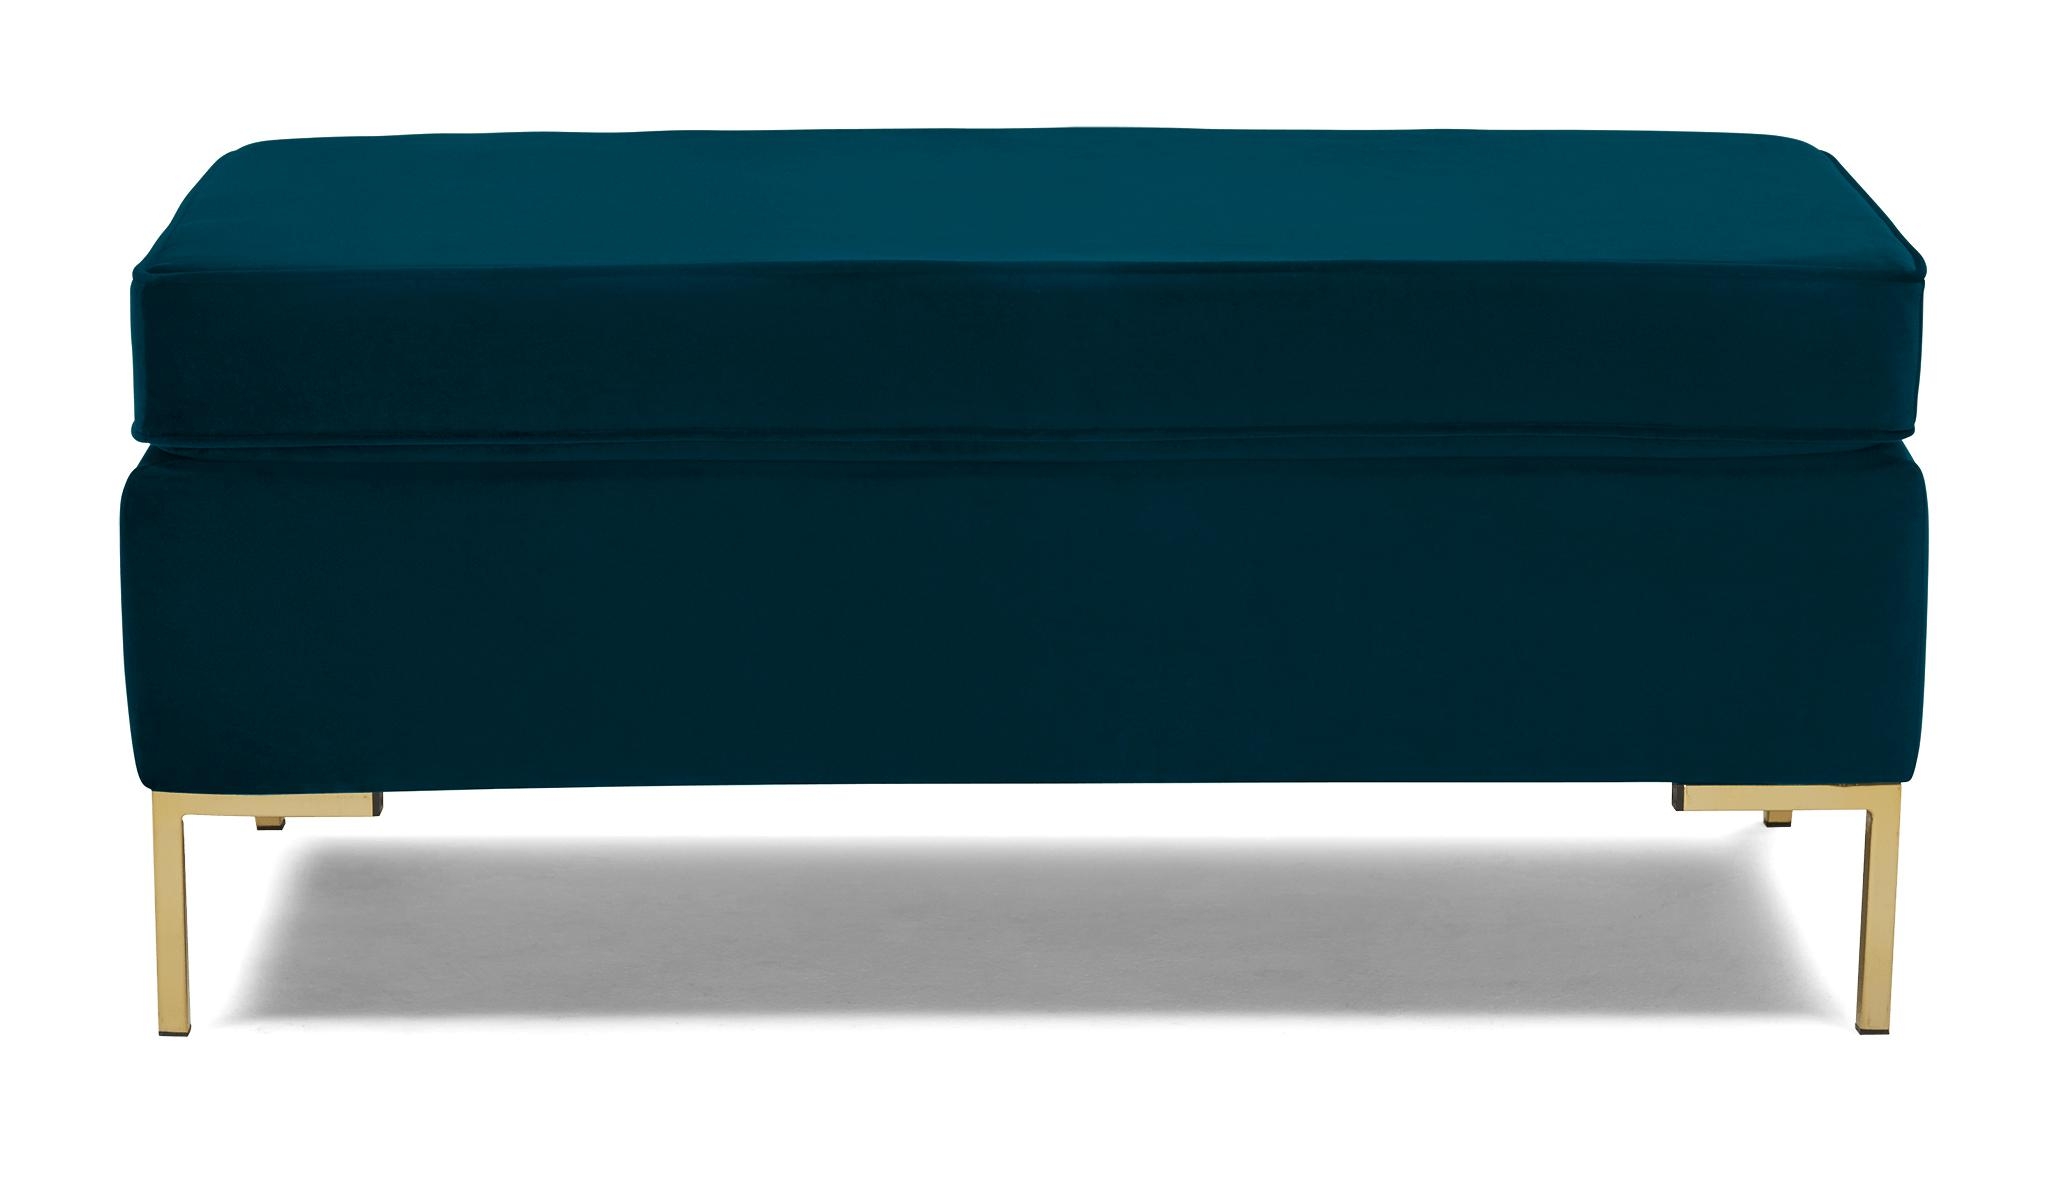 Blue Dee Mid Century Modern Bench with Storage - Key Largo Zenith Teal - Image 0